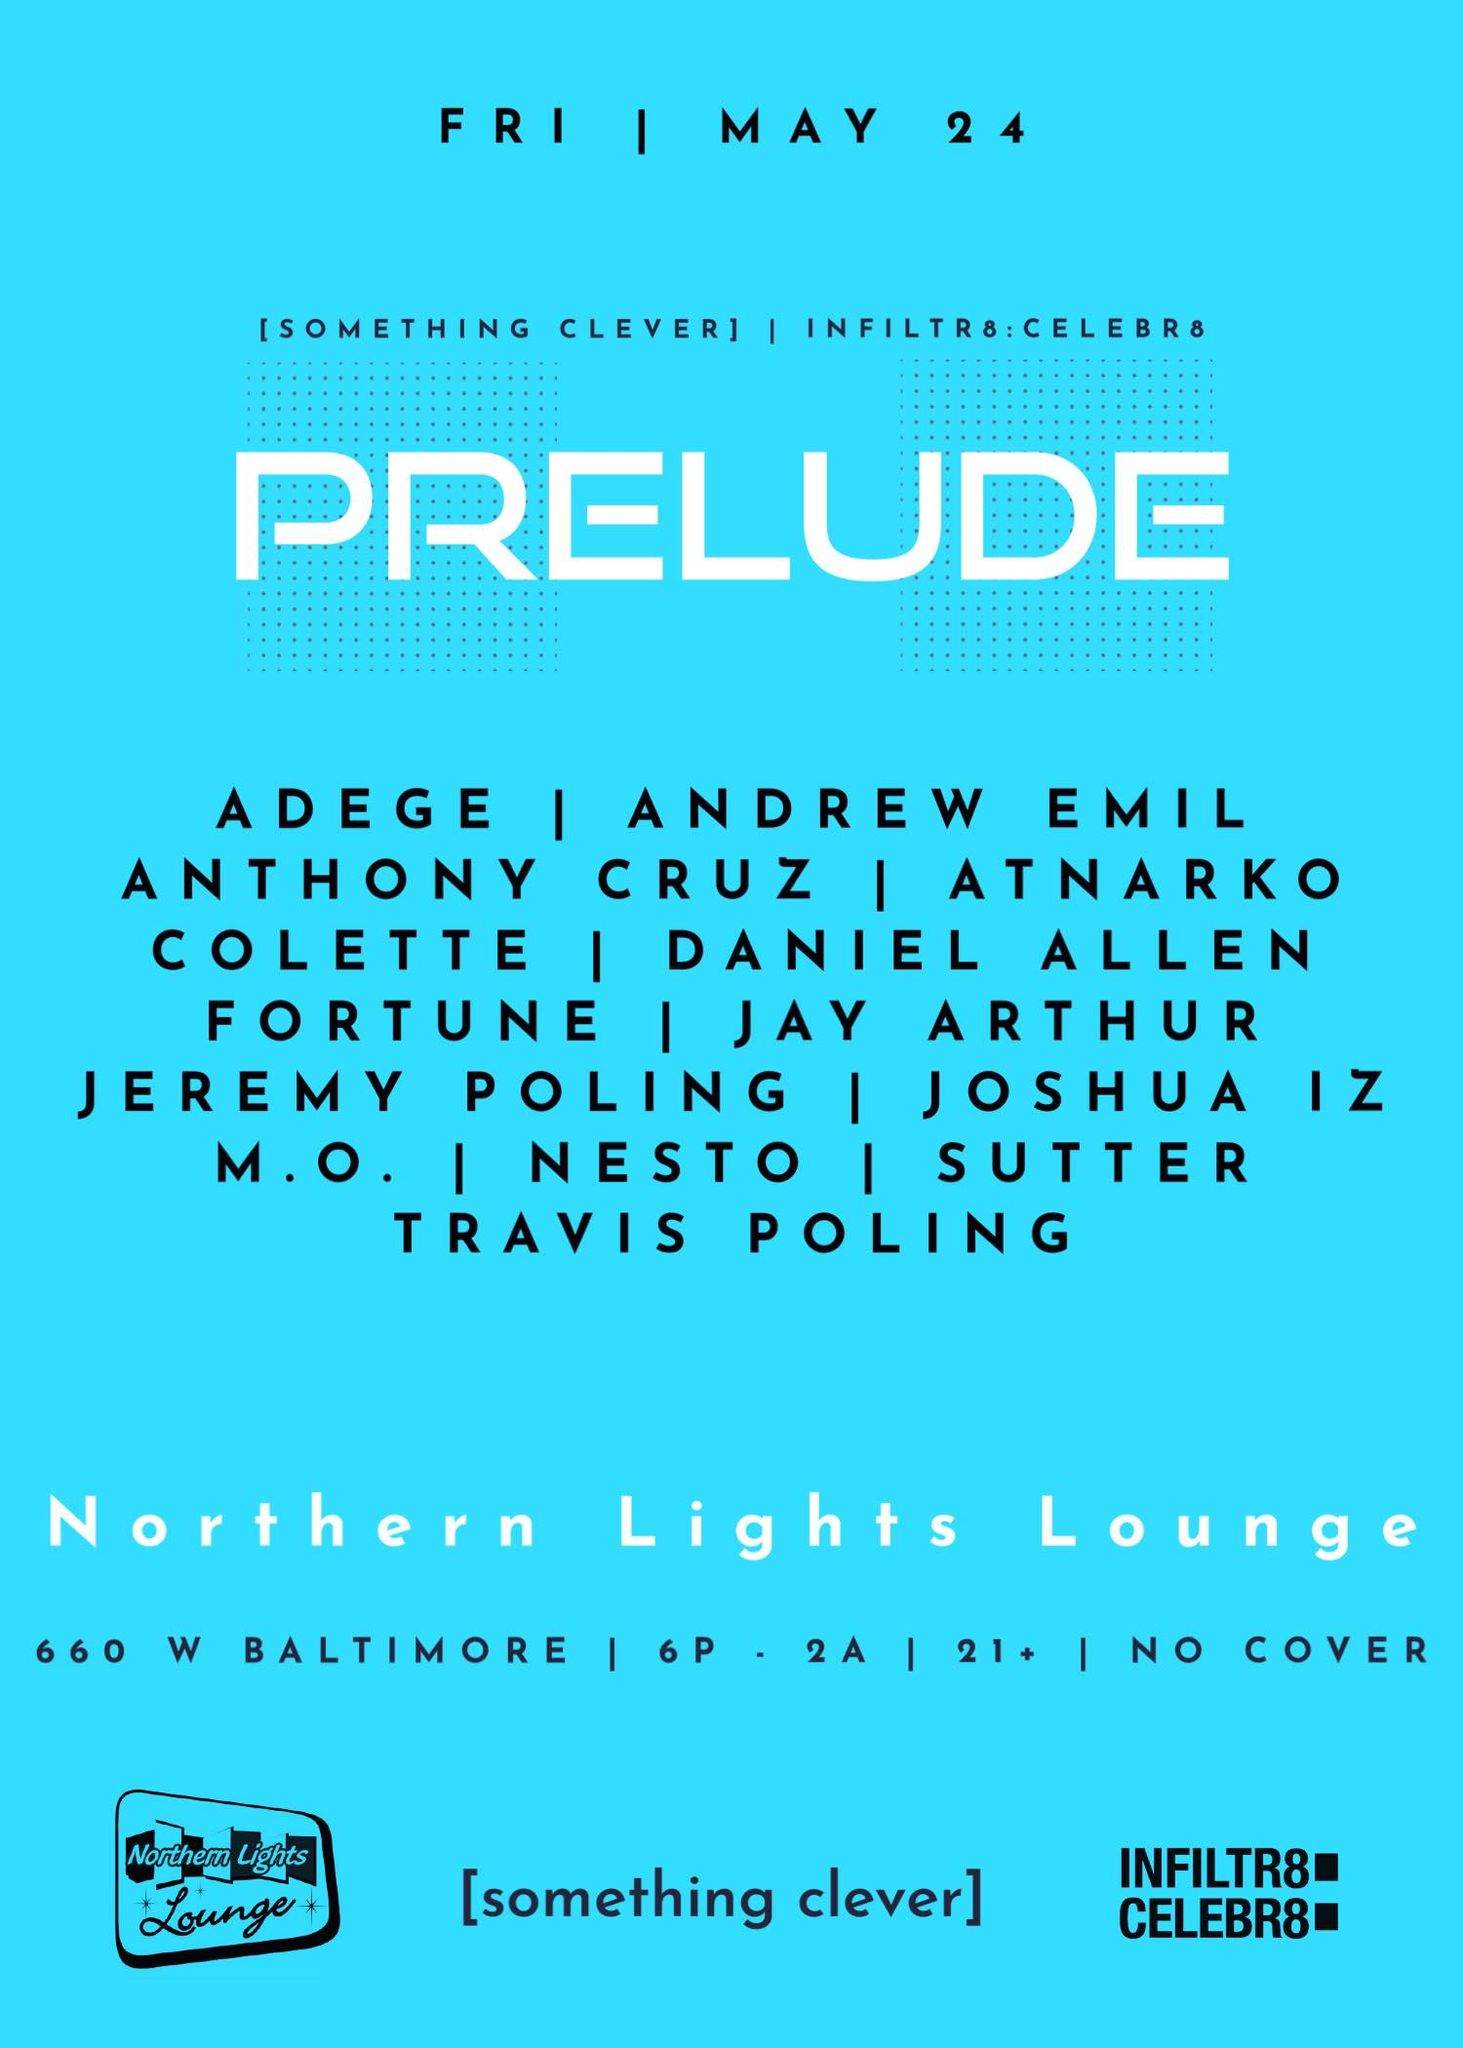 Prelude 2024 - Colette, Atnarko, Joshua Iz, Andrew Emil, Fortune, Daniel Allen, +++ FREE w RSVP - フライヤー裏